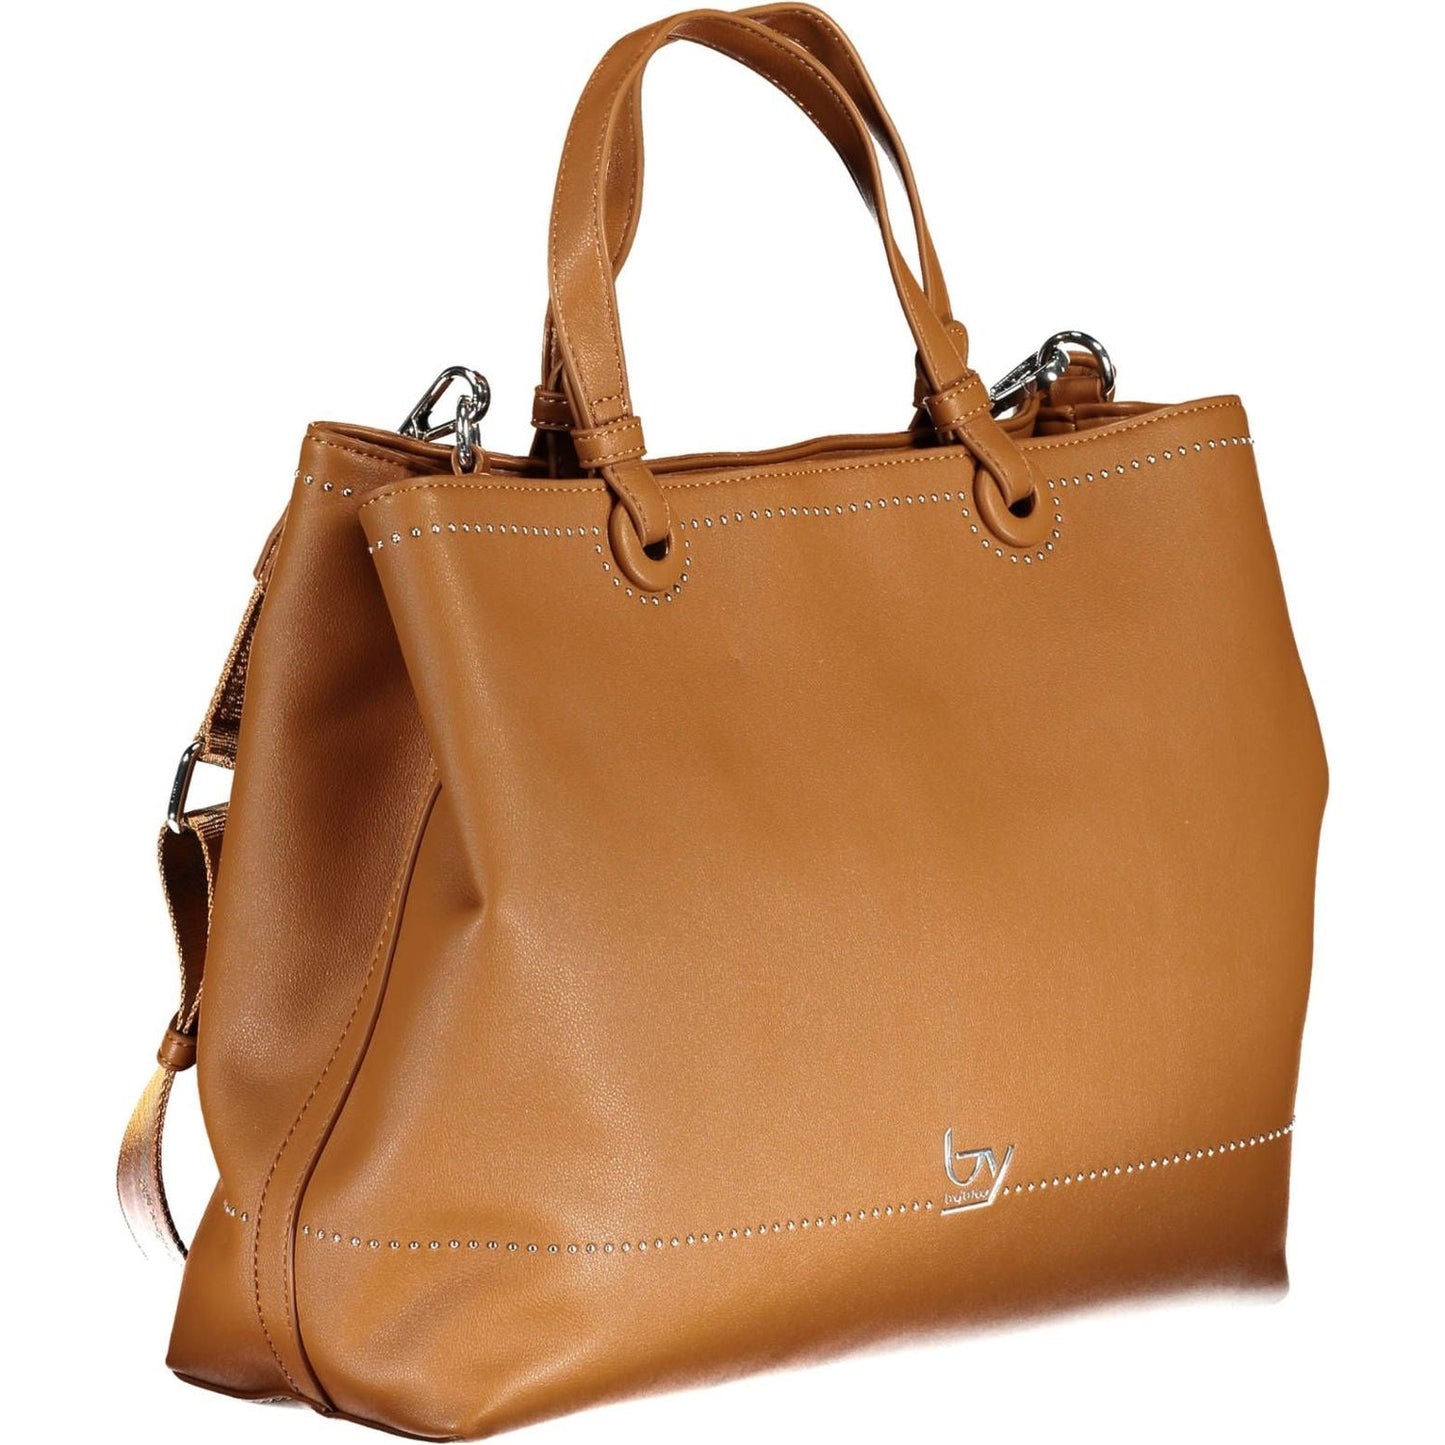 BYBLOS Elegant Two-Tone Brown Handbag with Logo Detail elegant-two-tone-brown-handbag-with-logo-detail